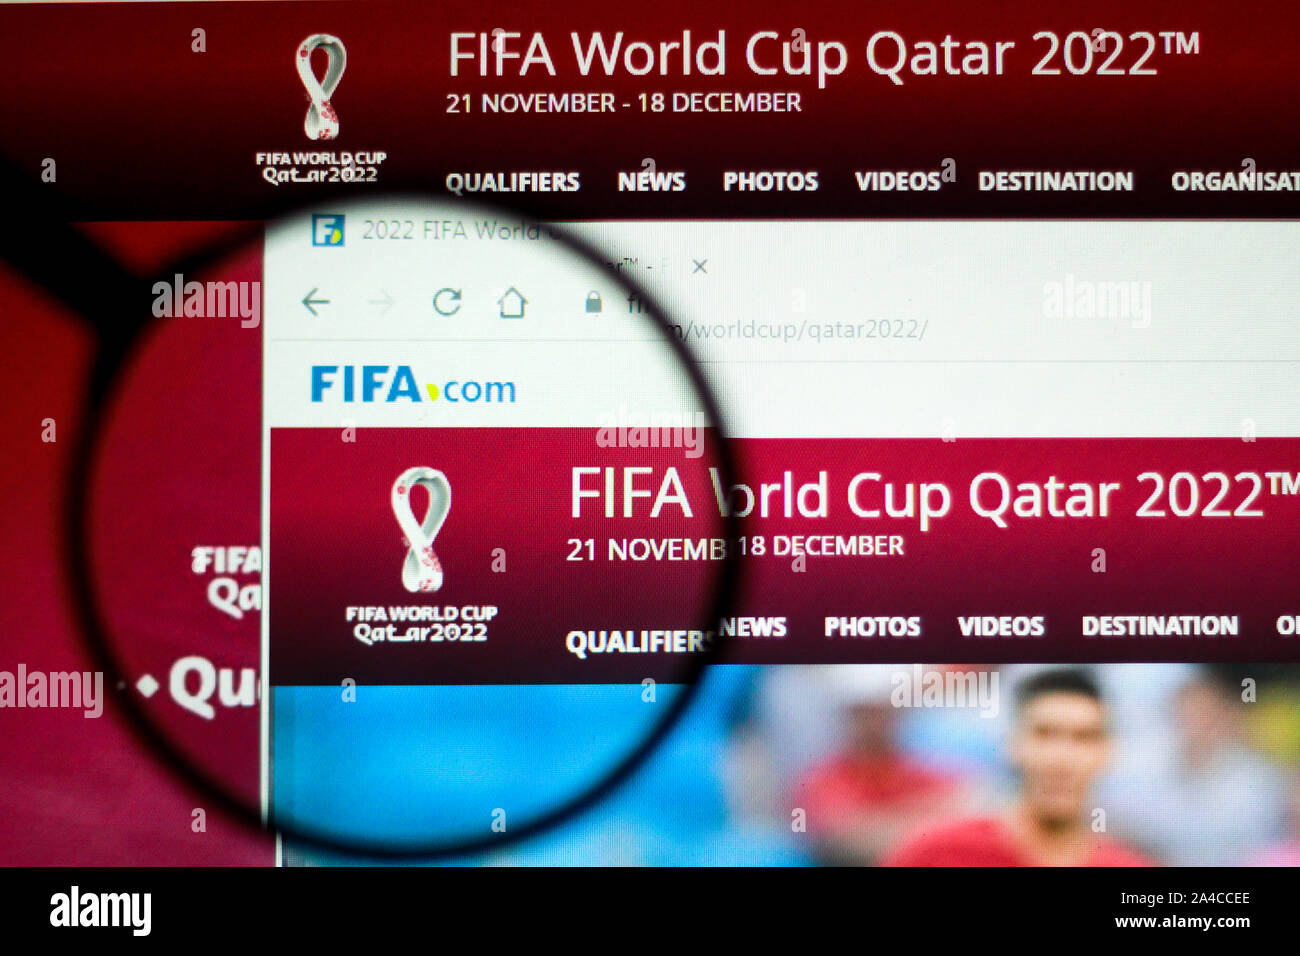 fifa world cup website